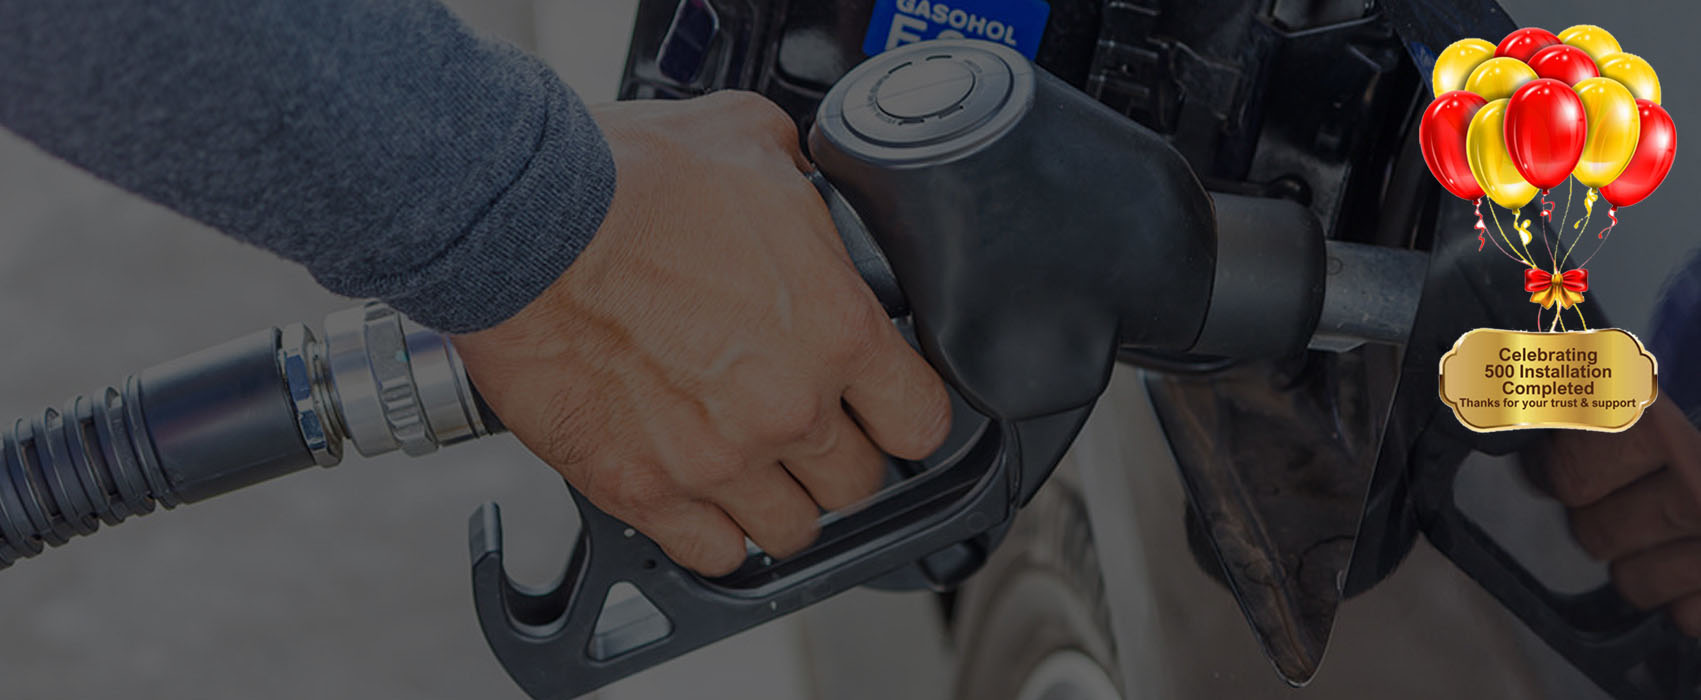 petrol pump billing software free download